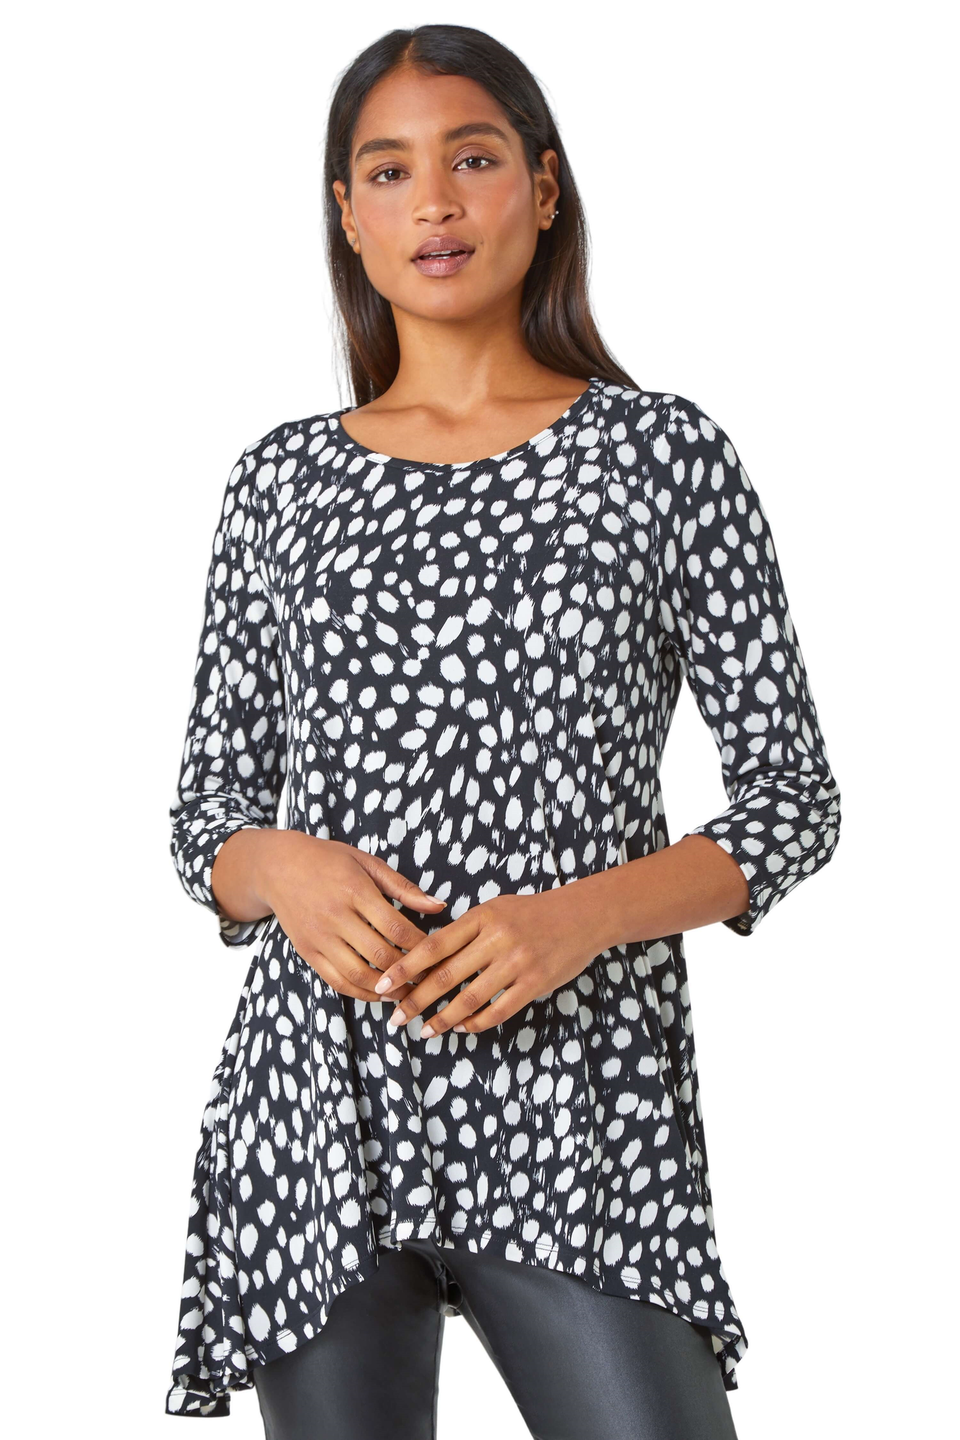 Tunic Tops for Women | Ladies Print & Plain Tunics – Matalan